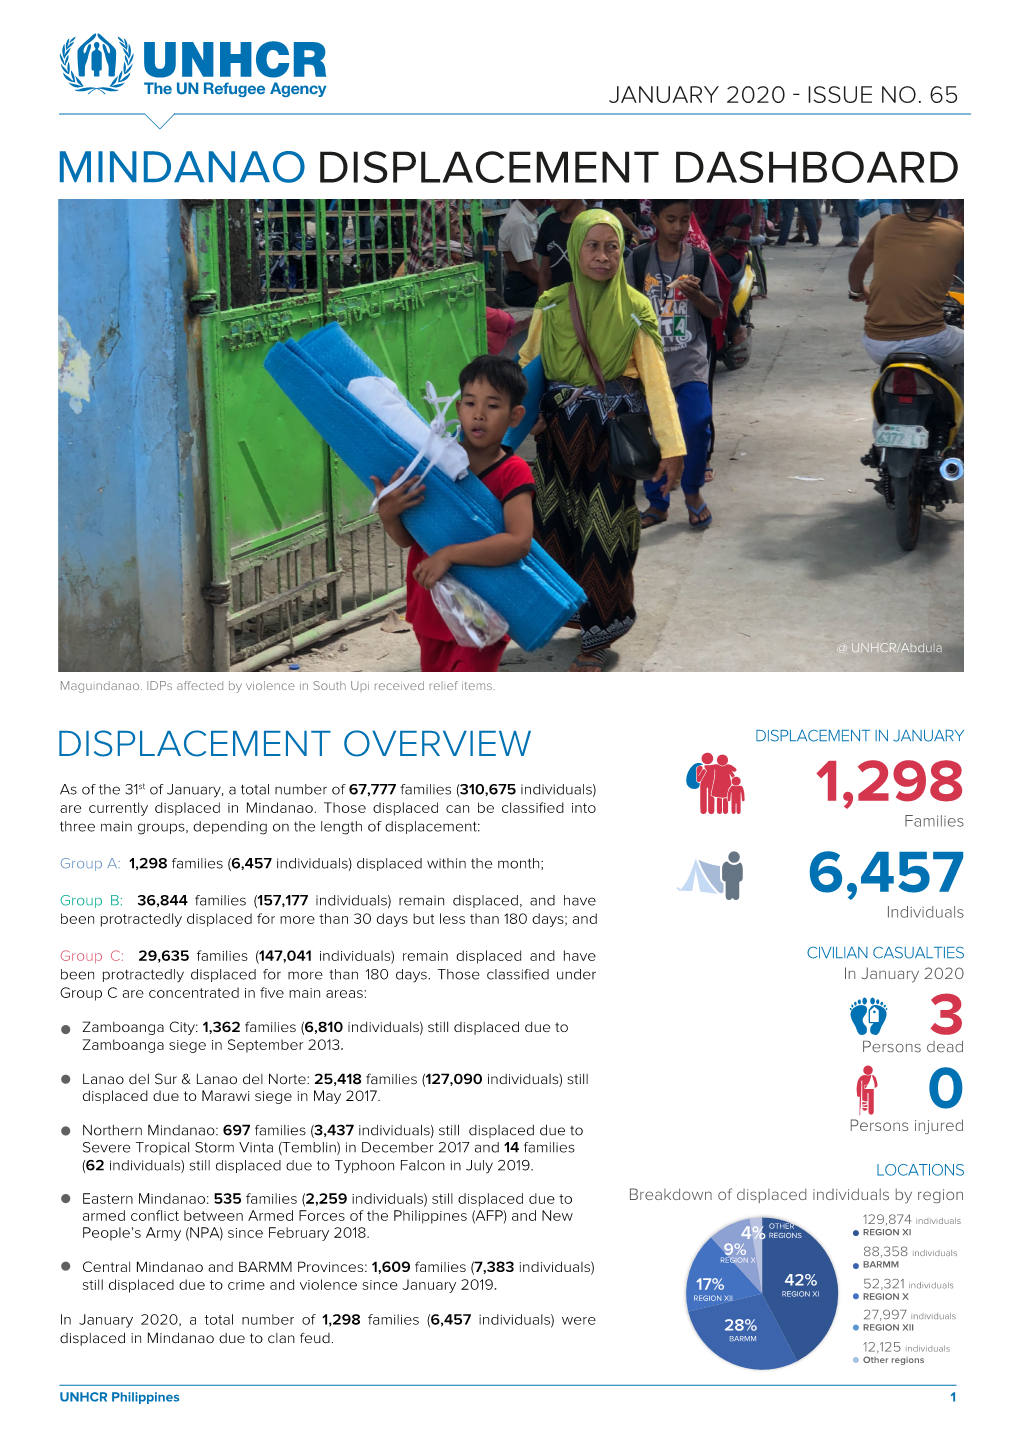 Mindanao Displacement Dashboard, January 2020